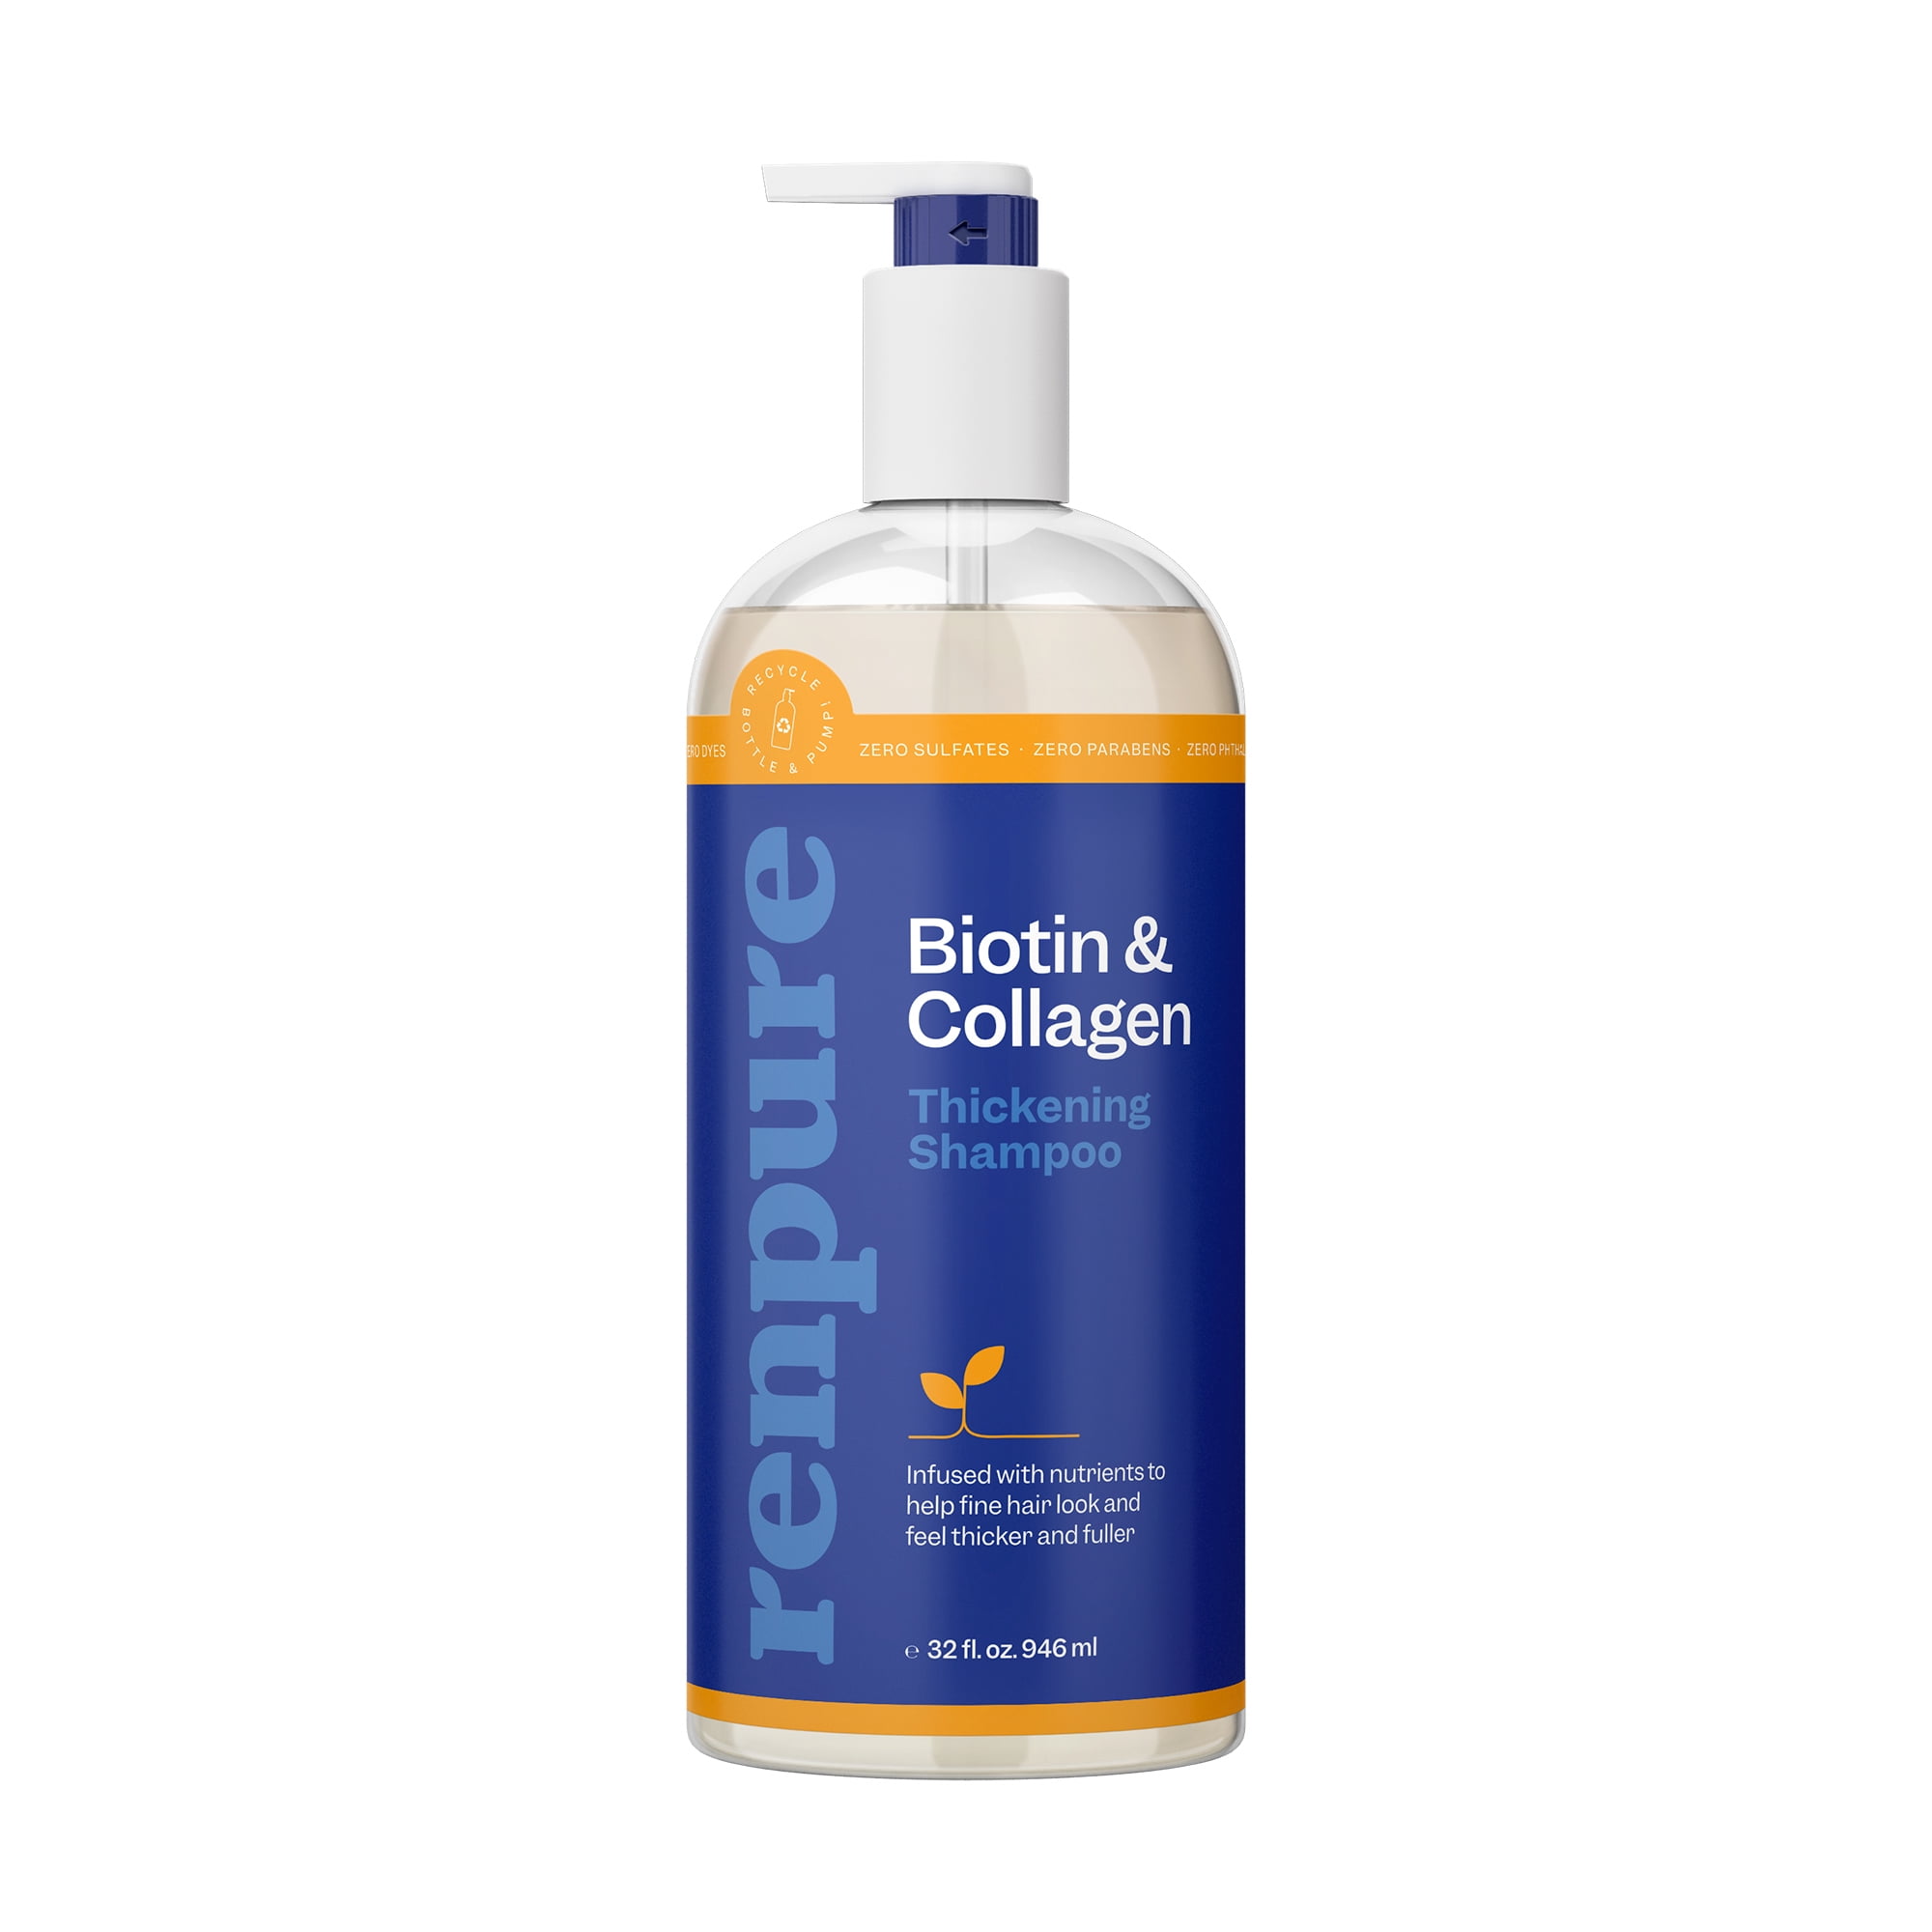 Renpure Biotin & Collagen Thickening Hair Shampoo, 32 fluid ounces